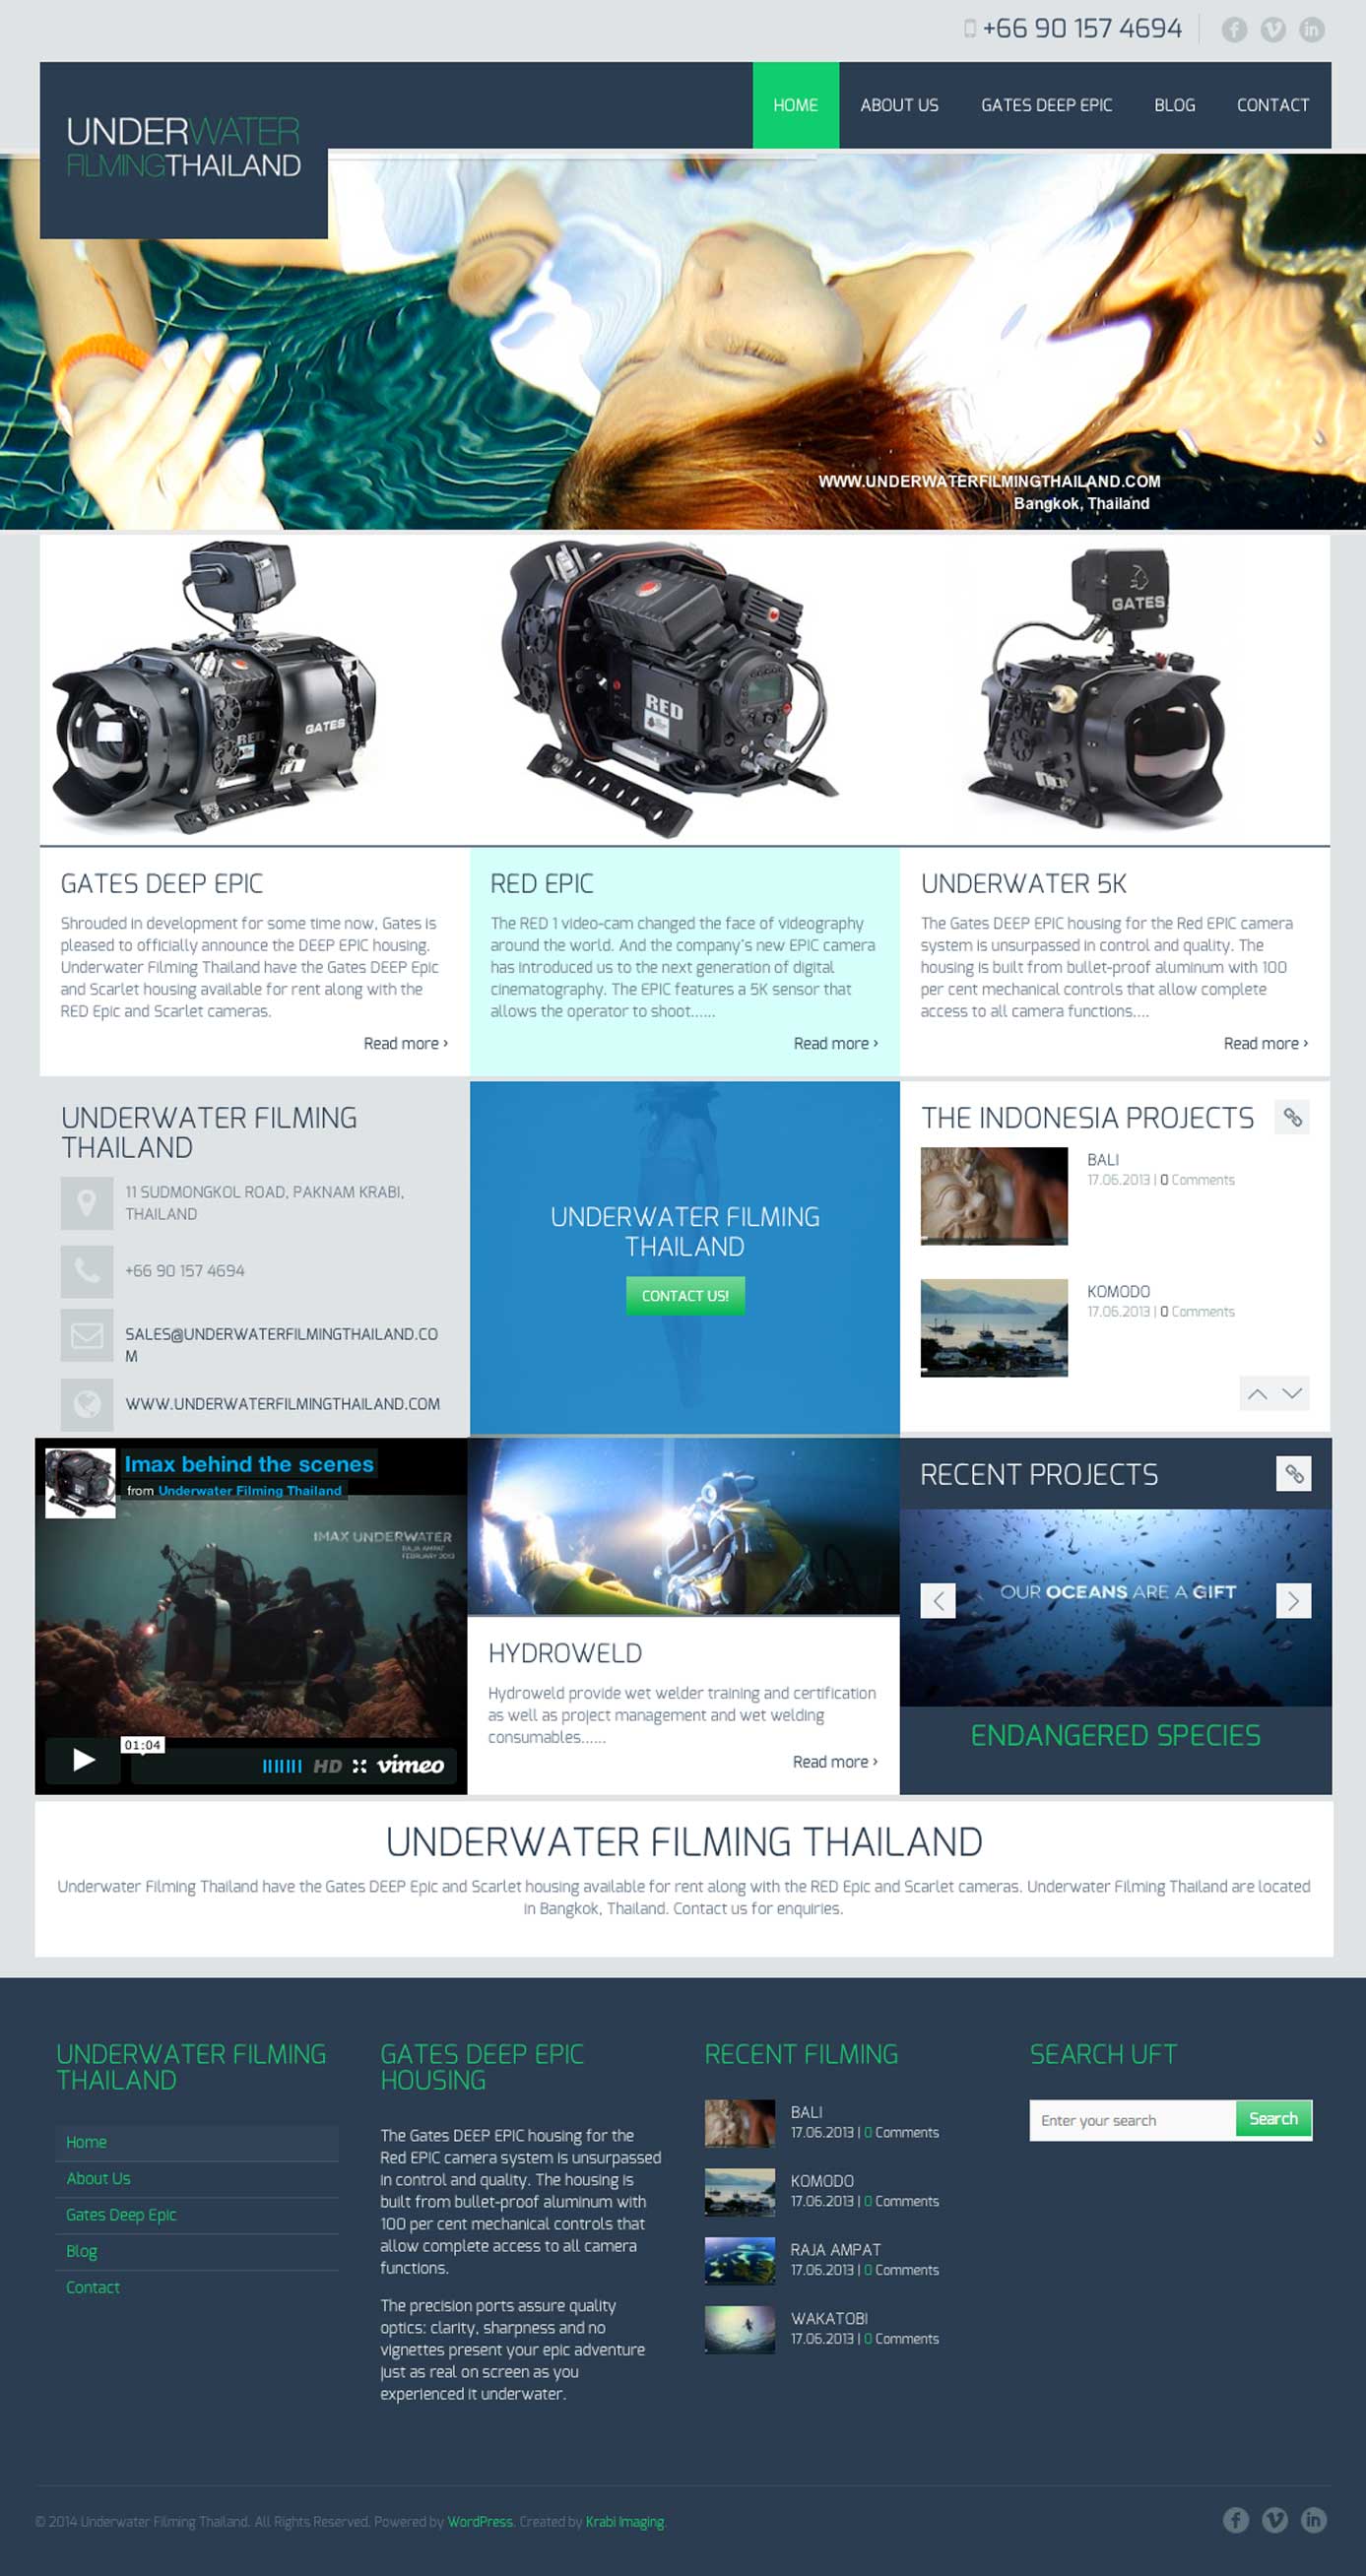 Underwater Filming Thailand With Phuket Web Media